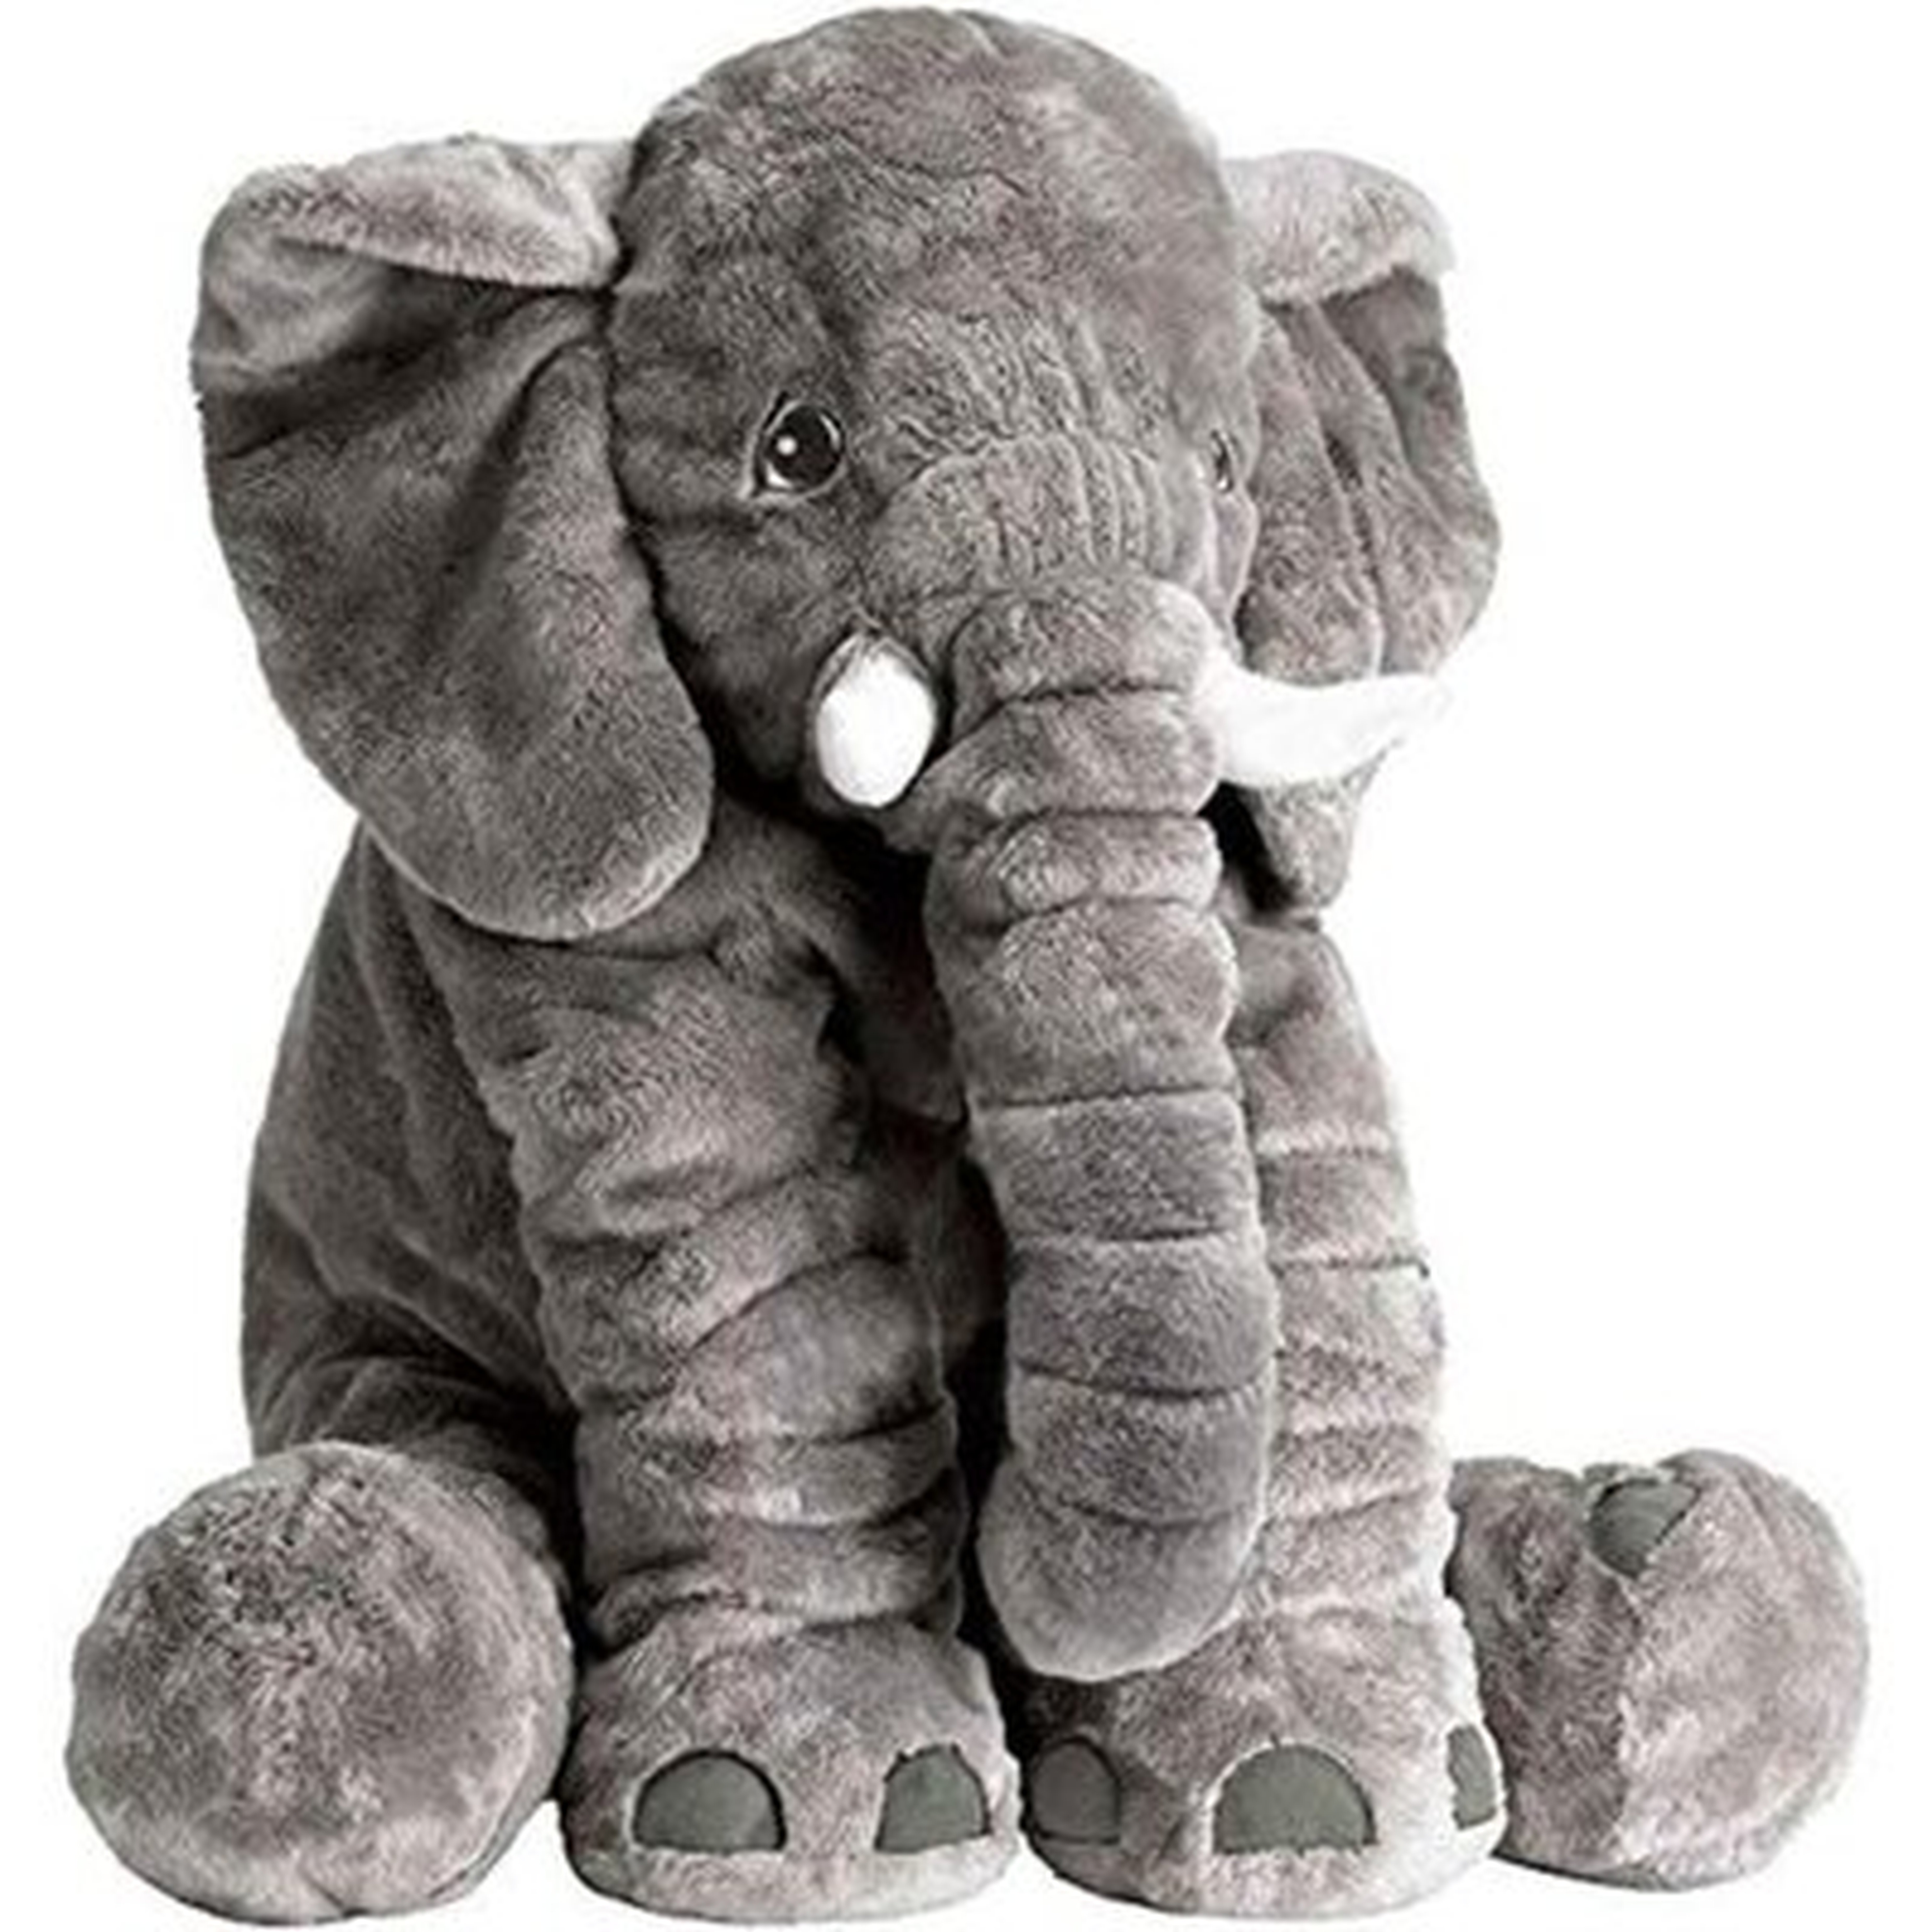 Stuffed Elephant Plush Animal Toy 24 INCH - Wayfair